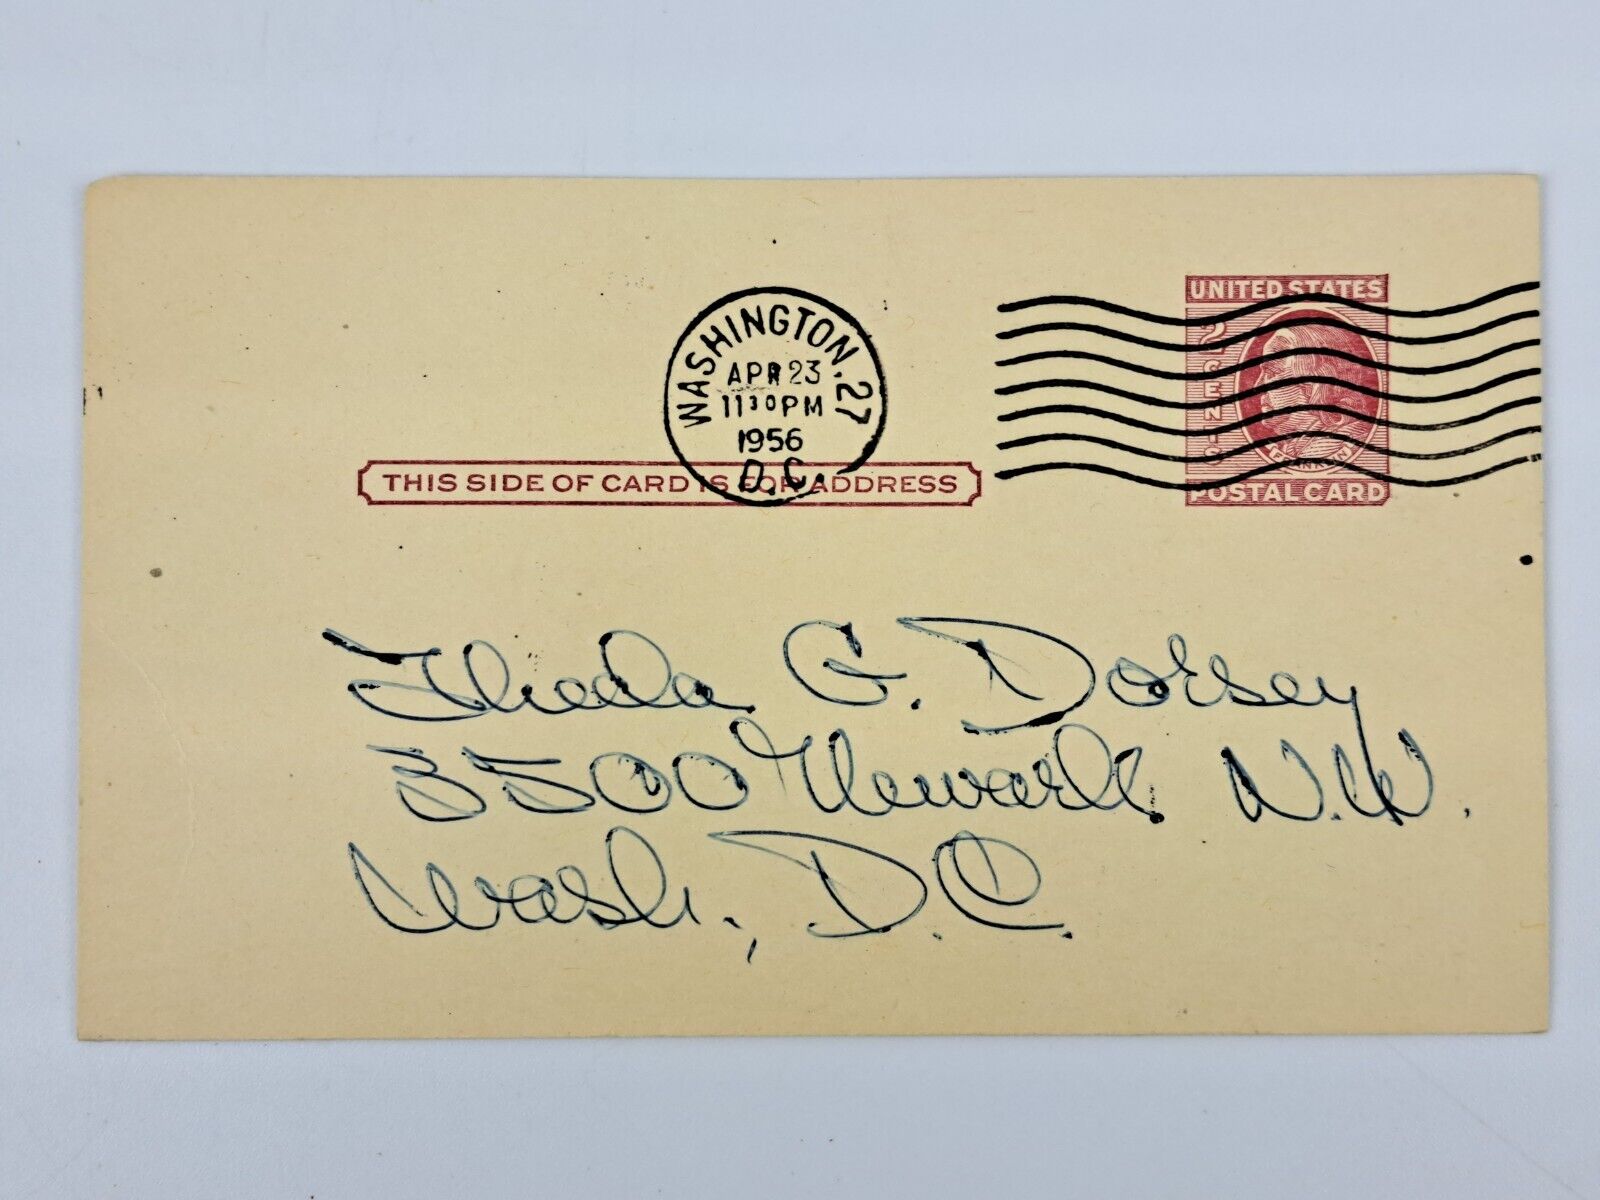 1956 Postcard from Packard Dealer, Covington Motor Co. in Bethesda Maryland